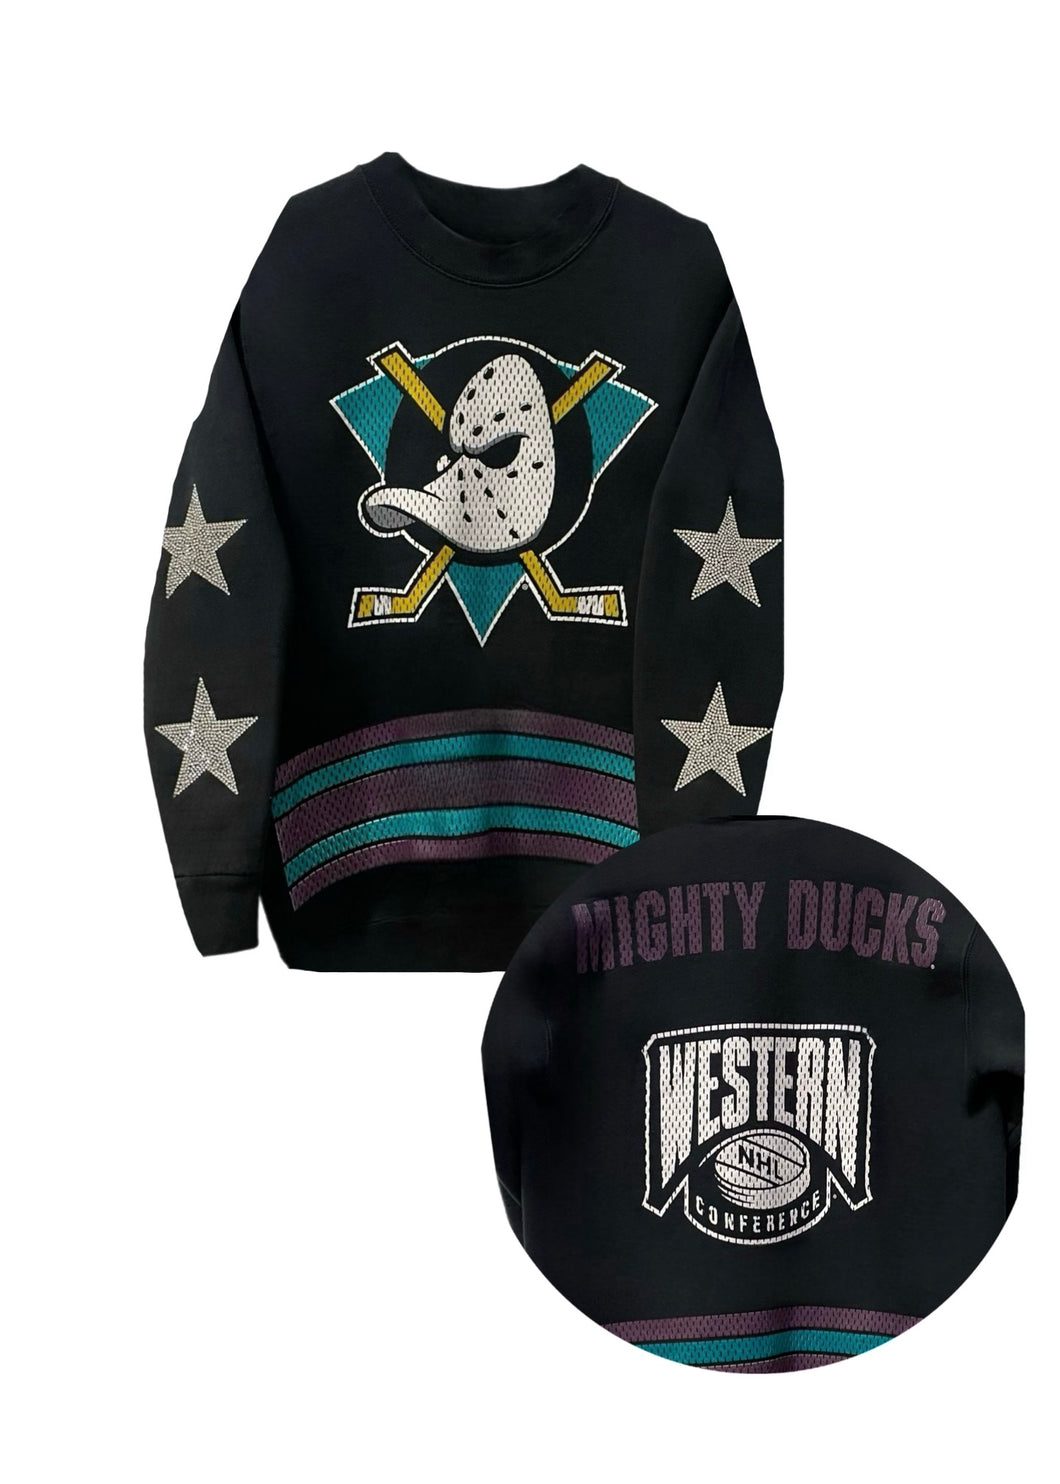 Anaheim Ducks, NHL One of a KIND Vintage “Mighty Ducks” Sweatshirt with Crystal Star Design - Size: S/M